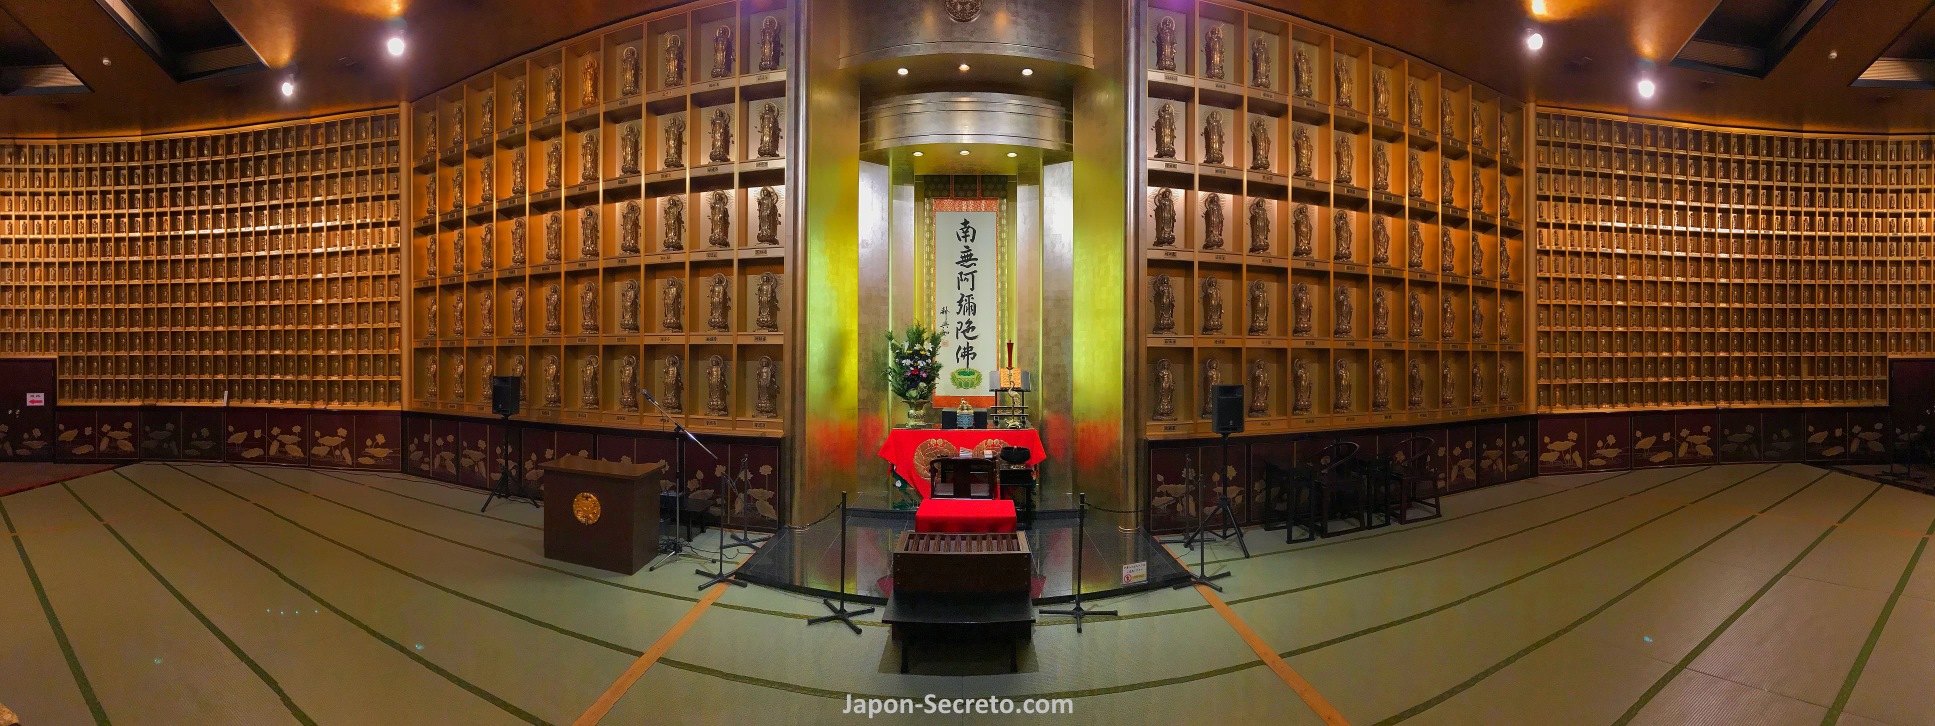 Interior del Buda gigante de Ushiku